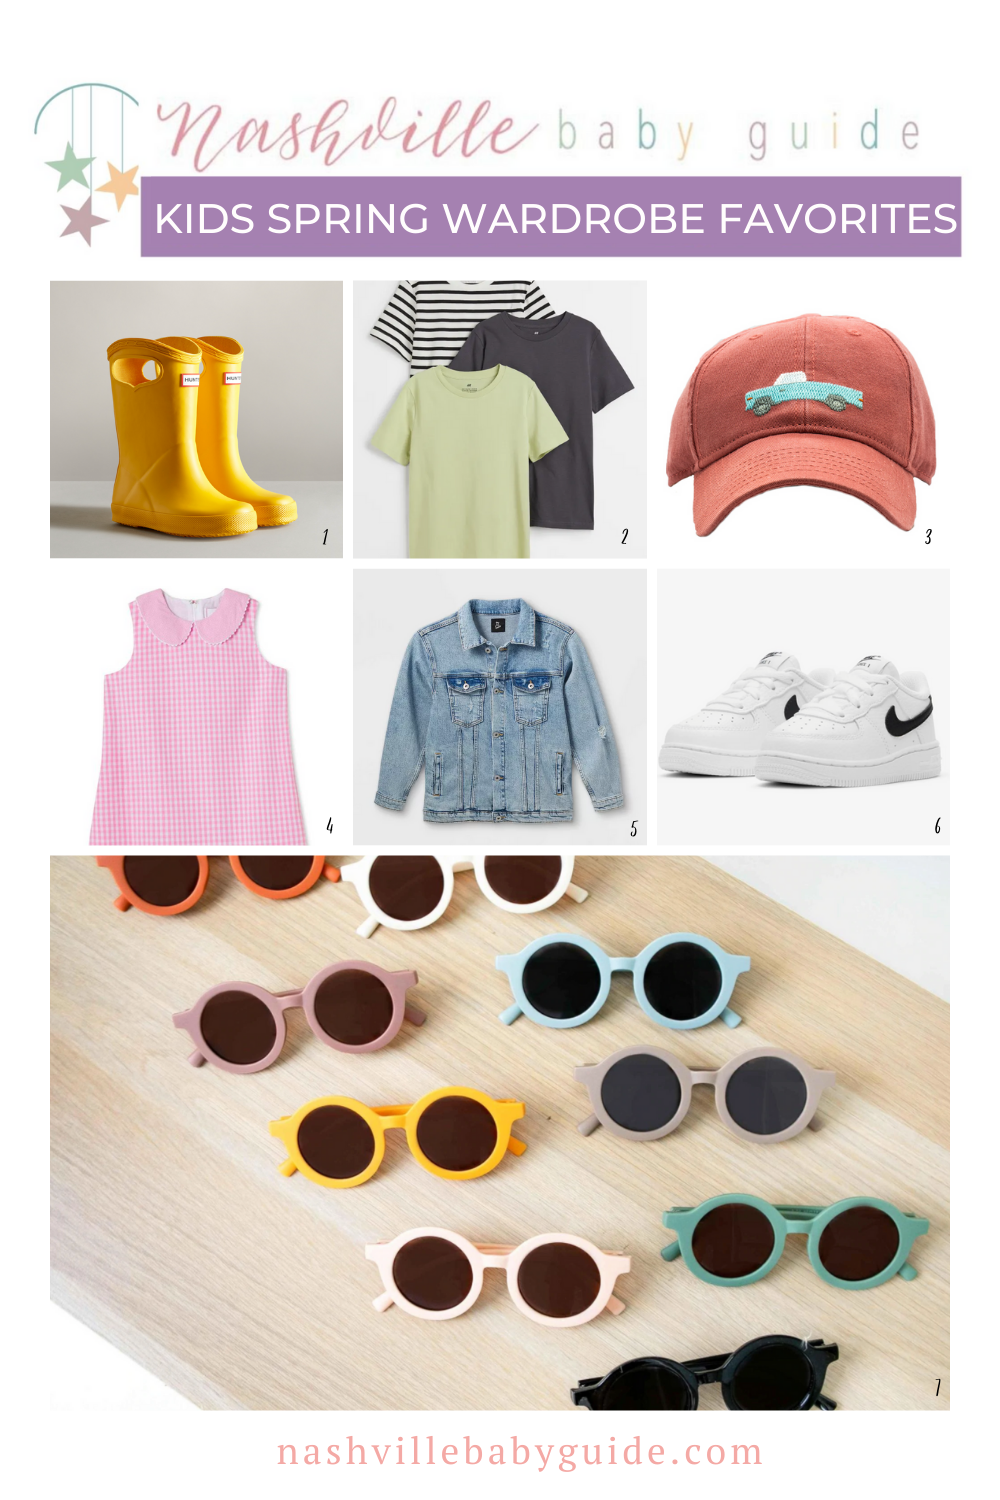 Kids Spring Wardrobe Items | Nashville Baby Guide